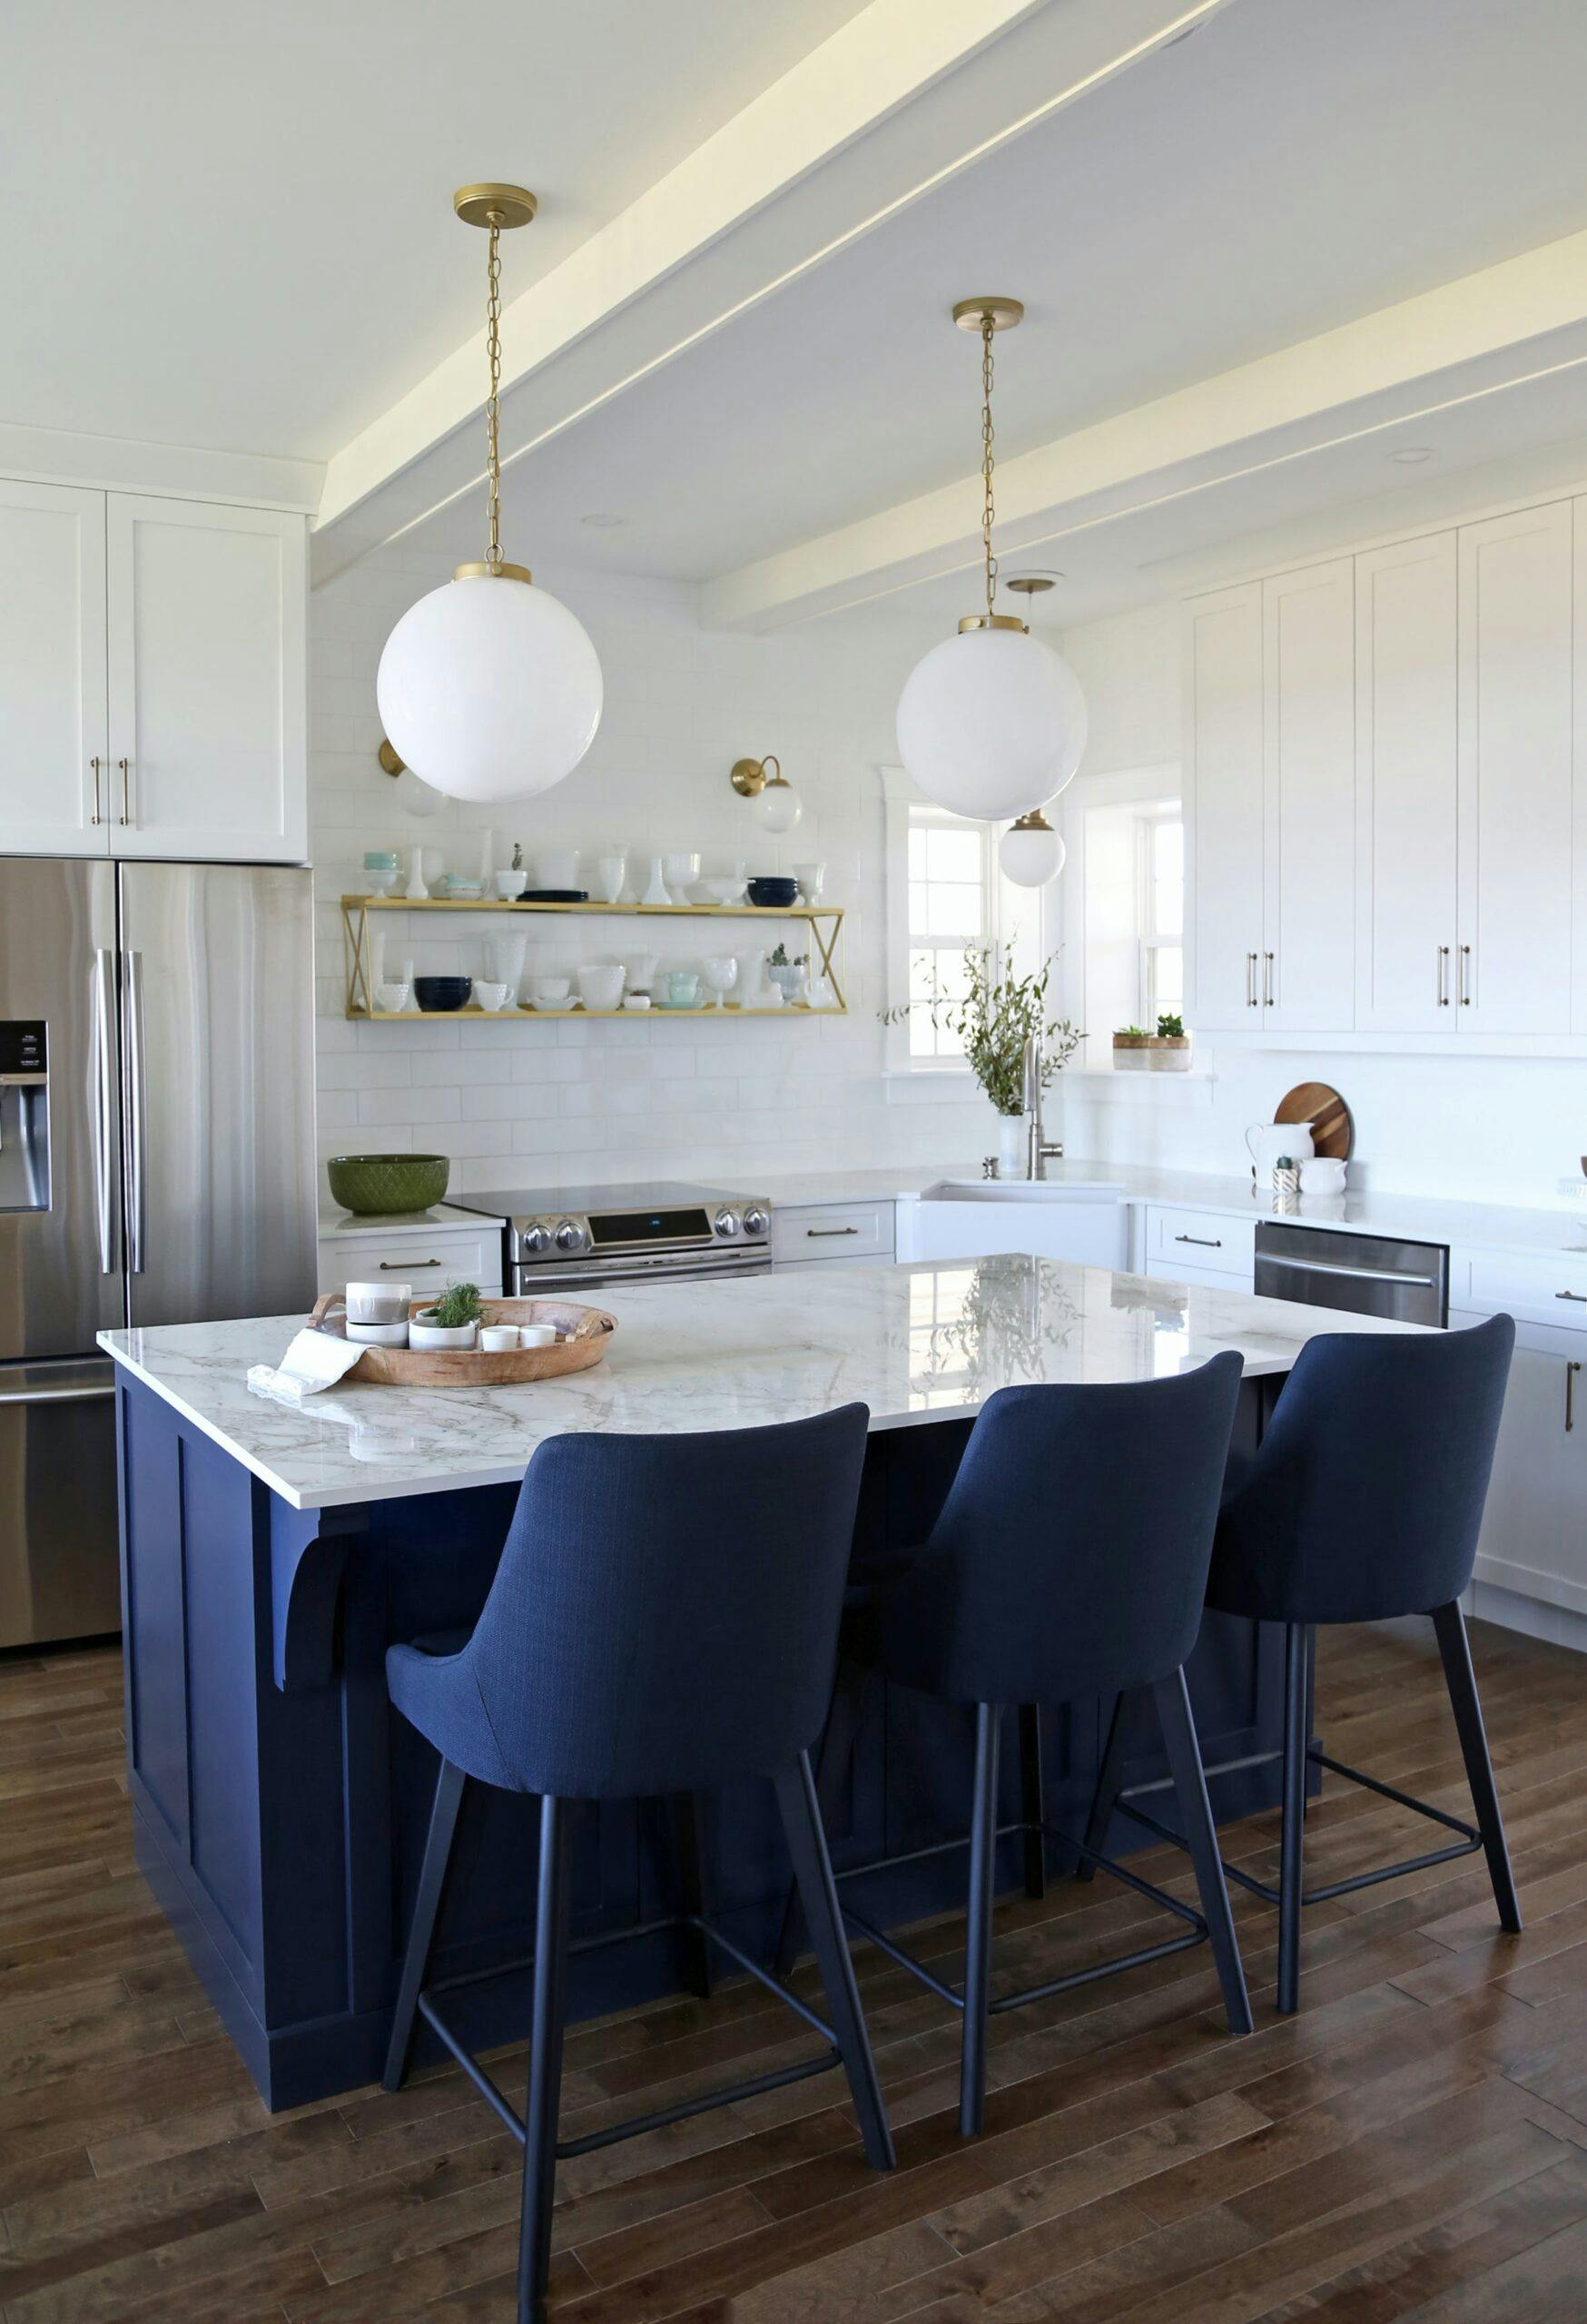 Cosentino’s new Dekton Bergen colour is the star of Fynes Designs kitchen renovation.